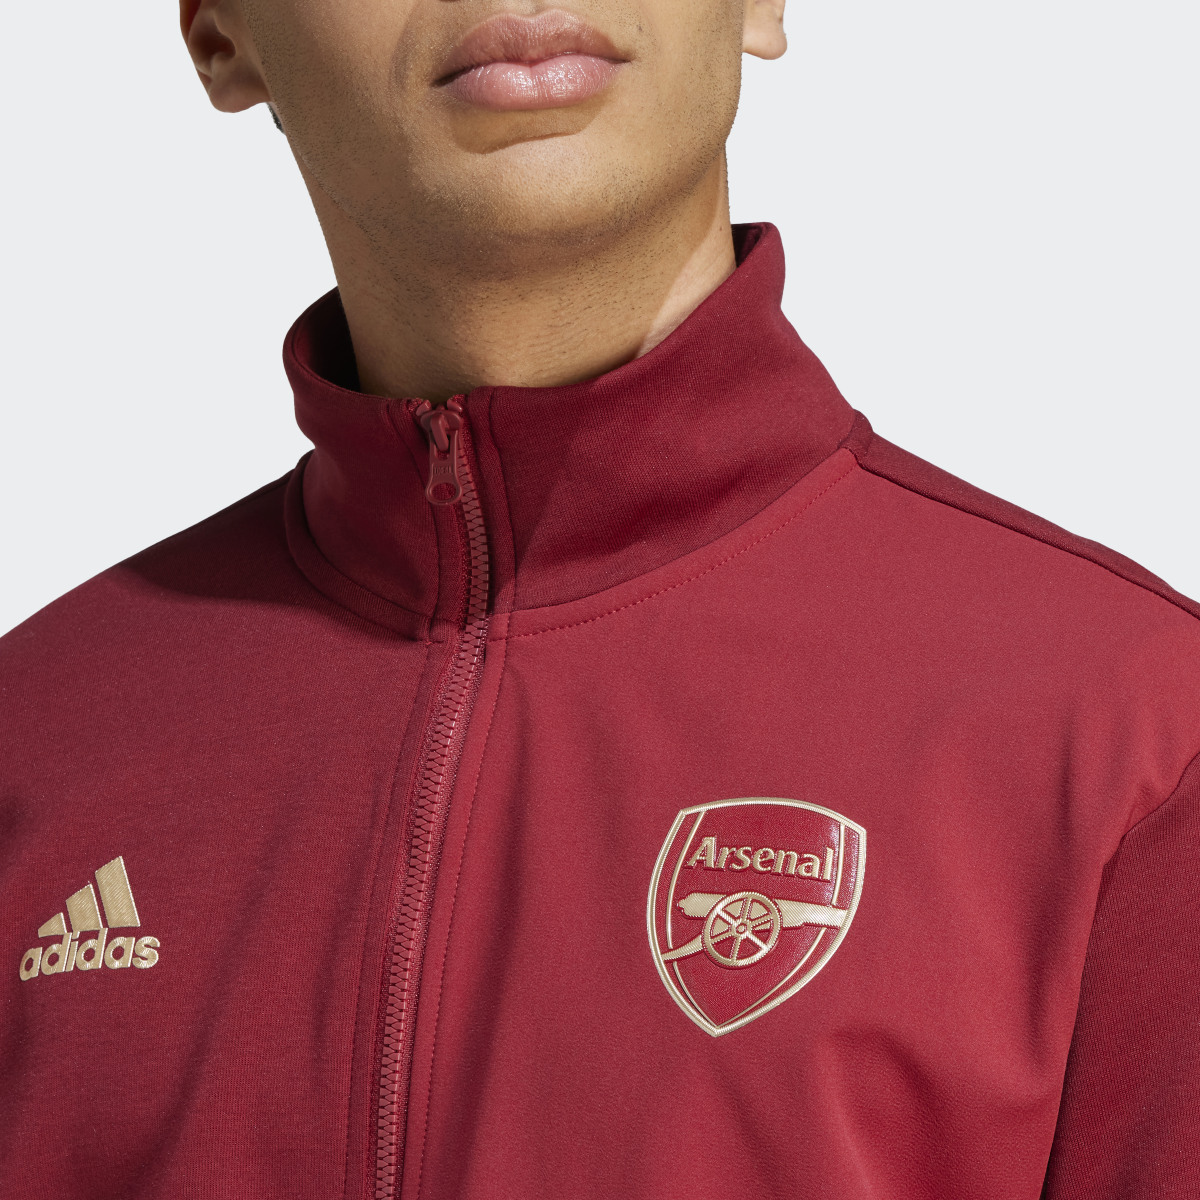 Adidas Arsenal Anthem Jacket. 7